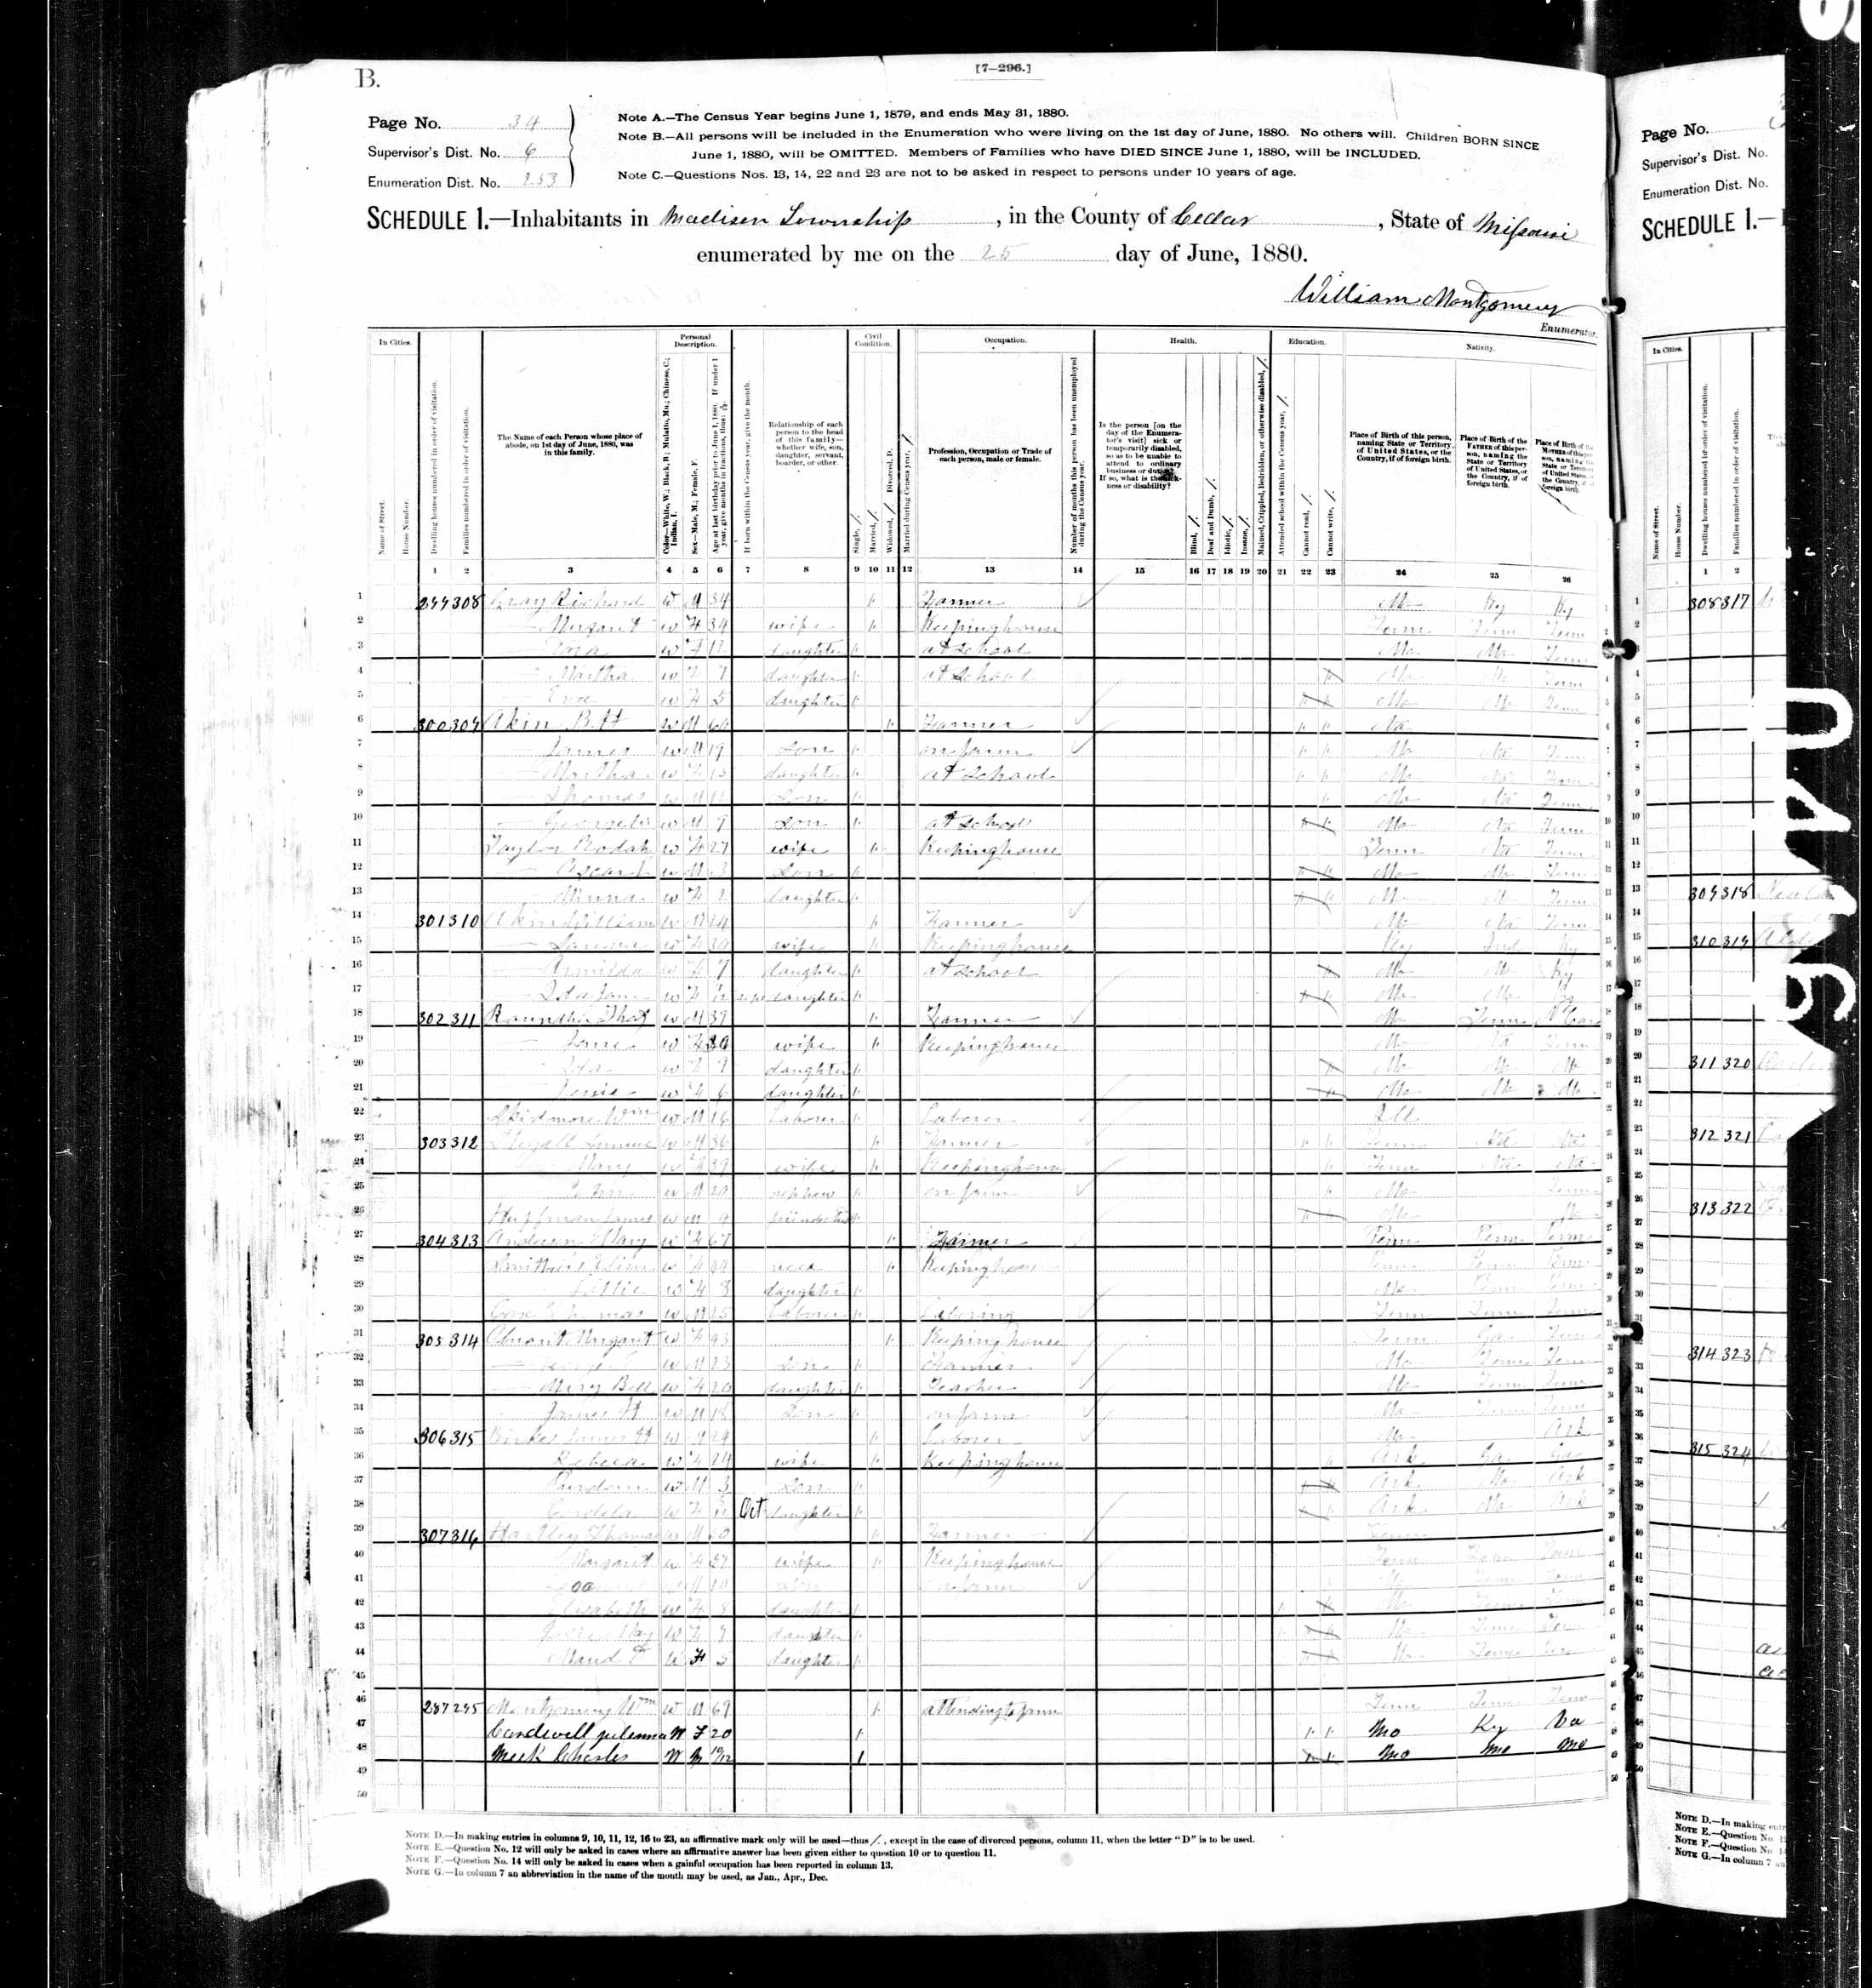 Thomas J. Hartley, 1880 Cedar County, Missouri, census